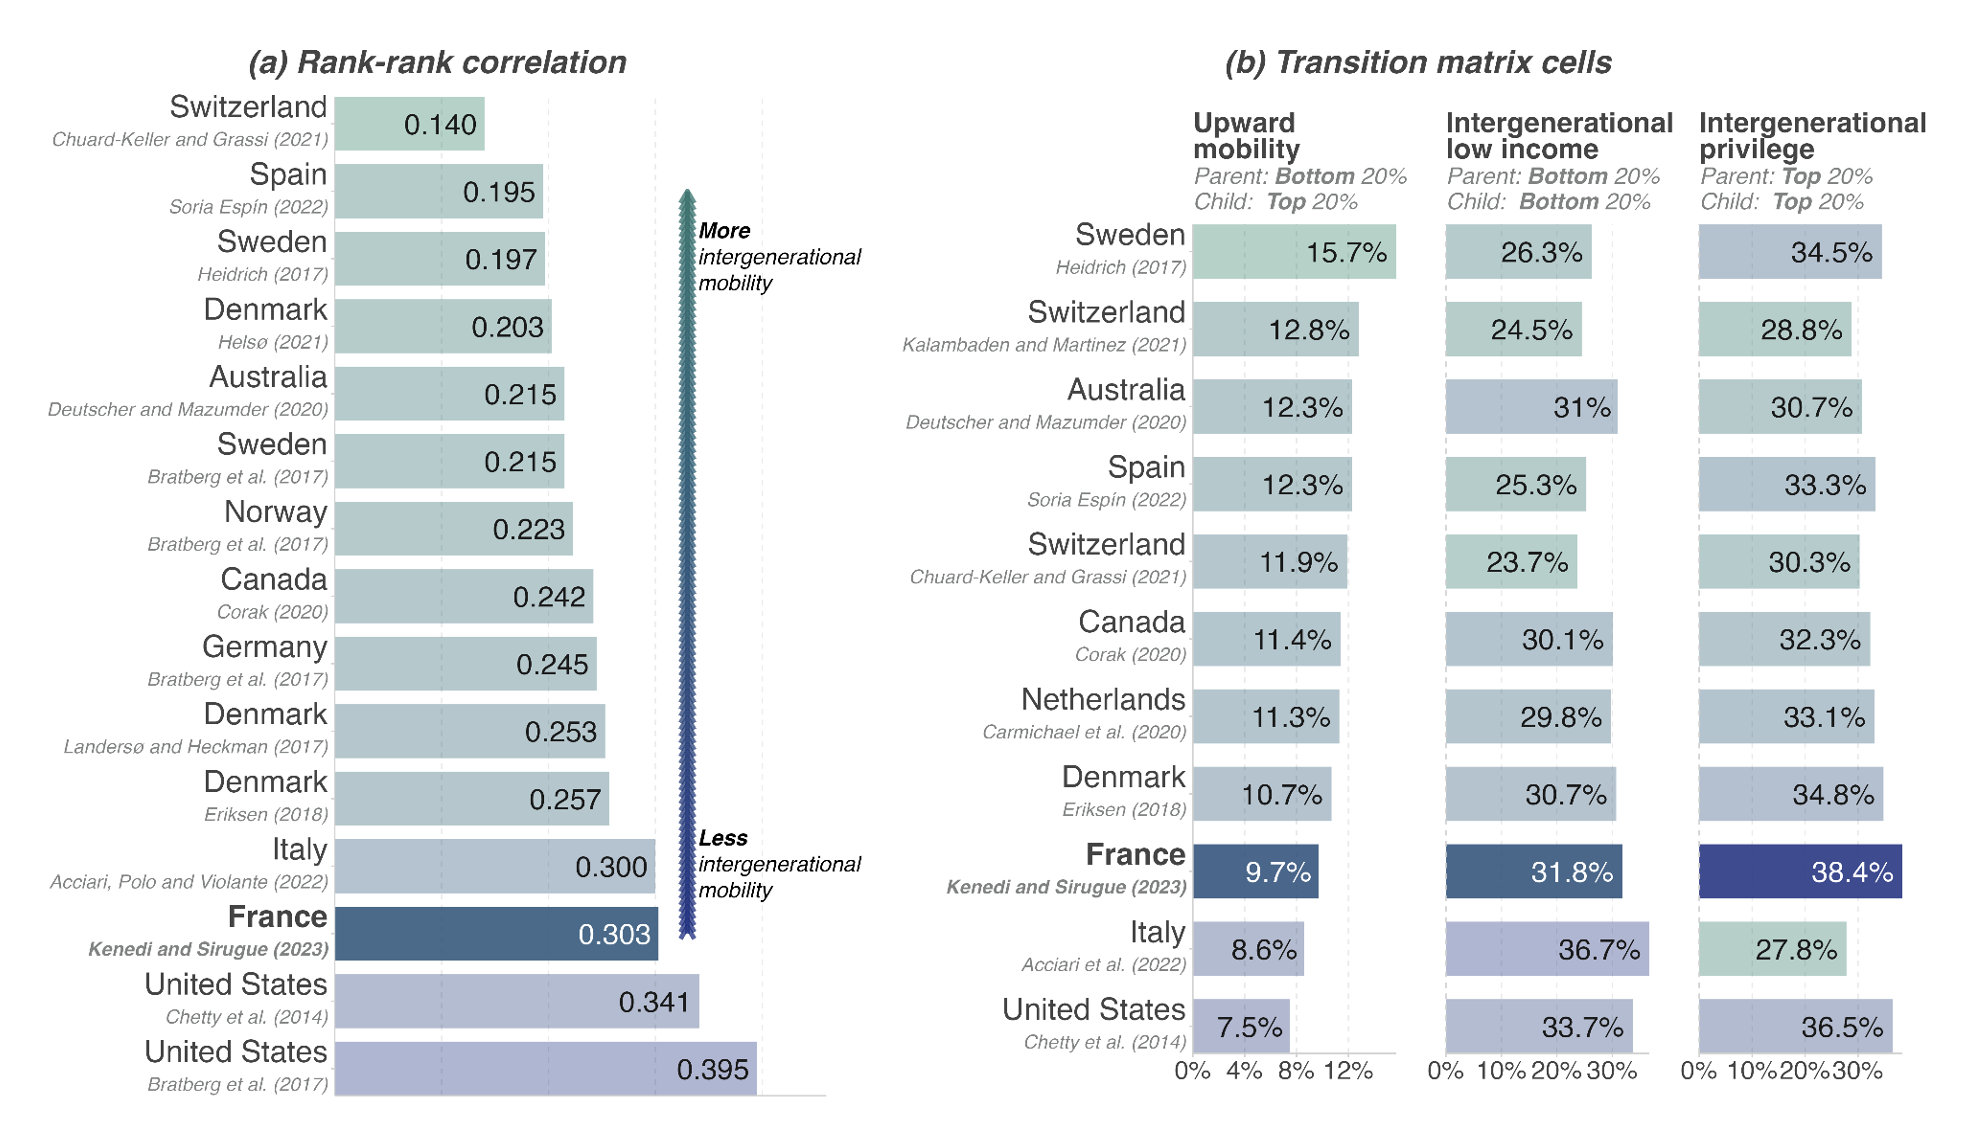 Figure 2 The rank-rank correlation and transition matrix in international comparison